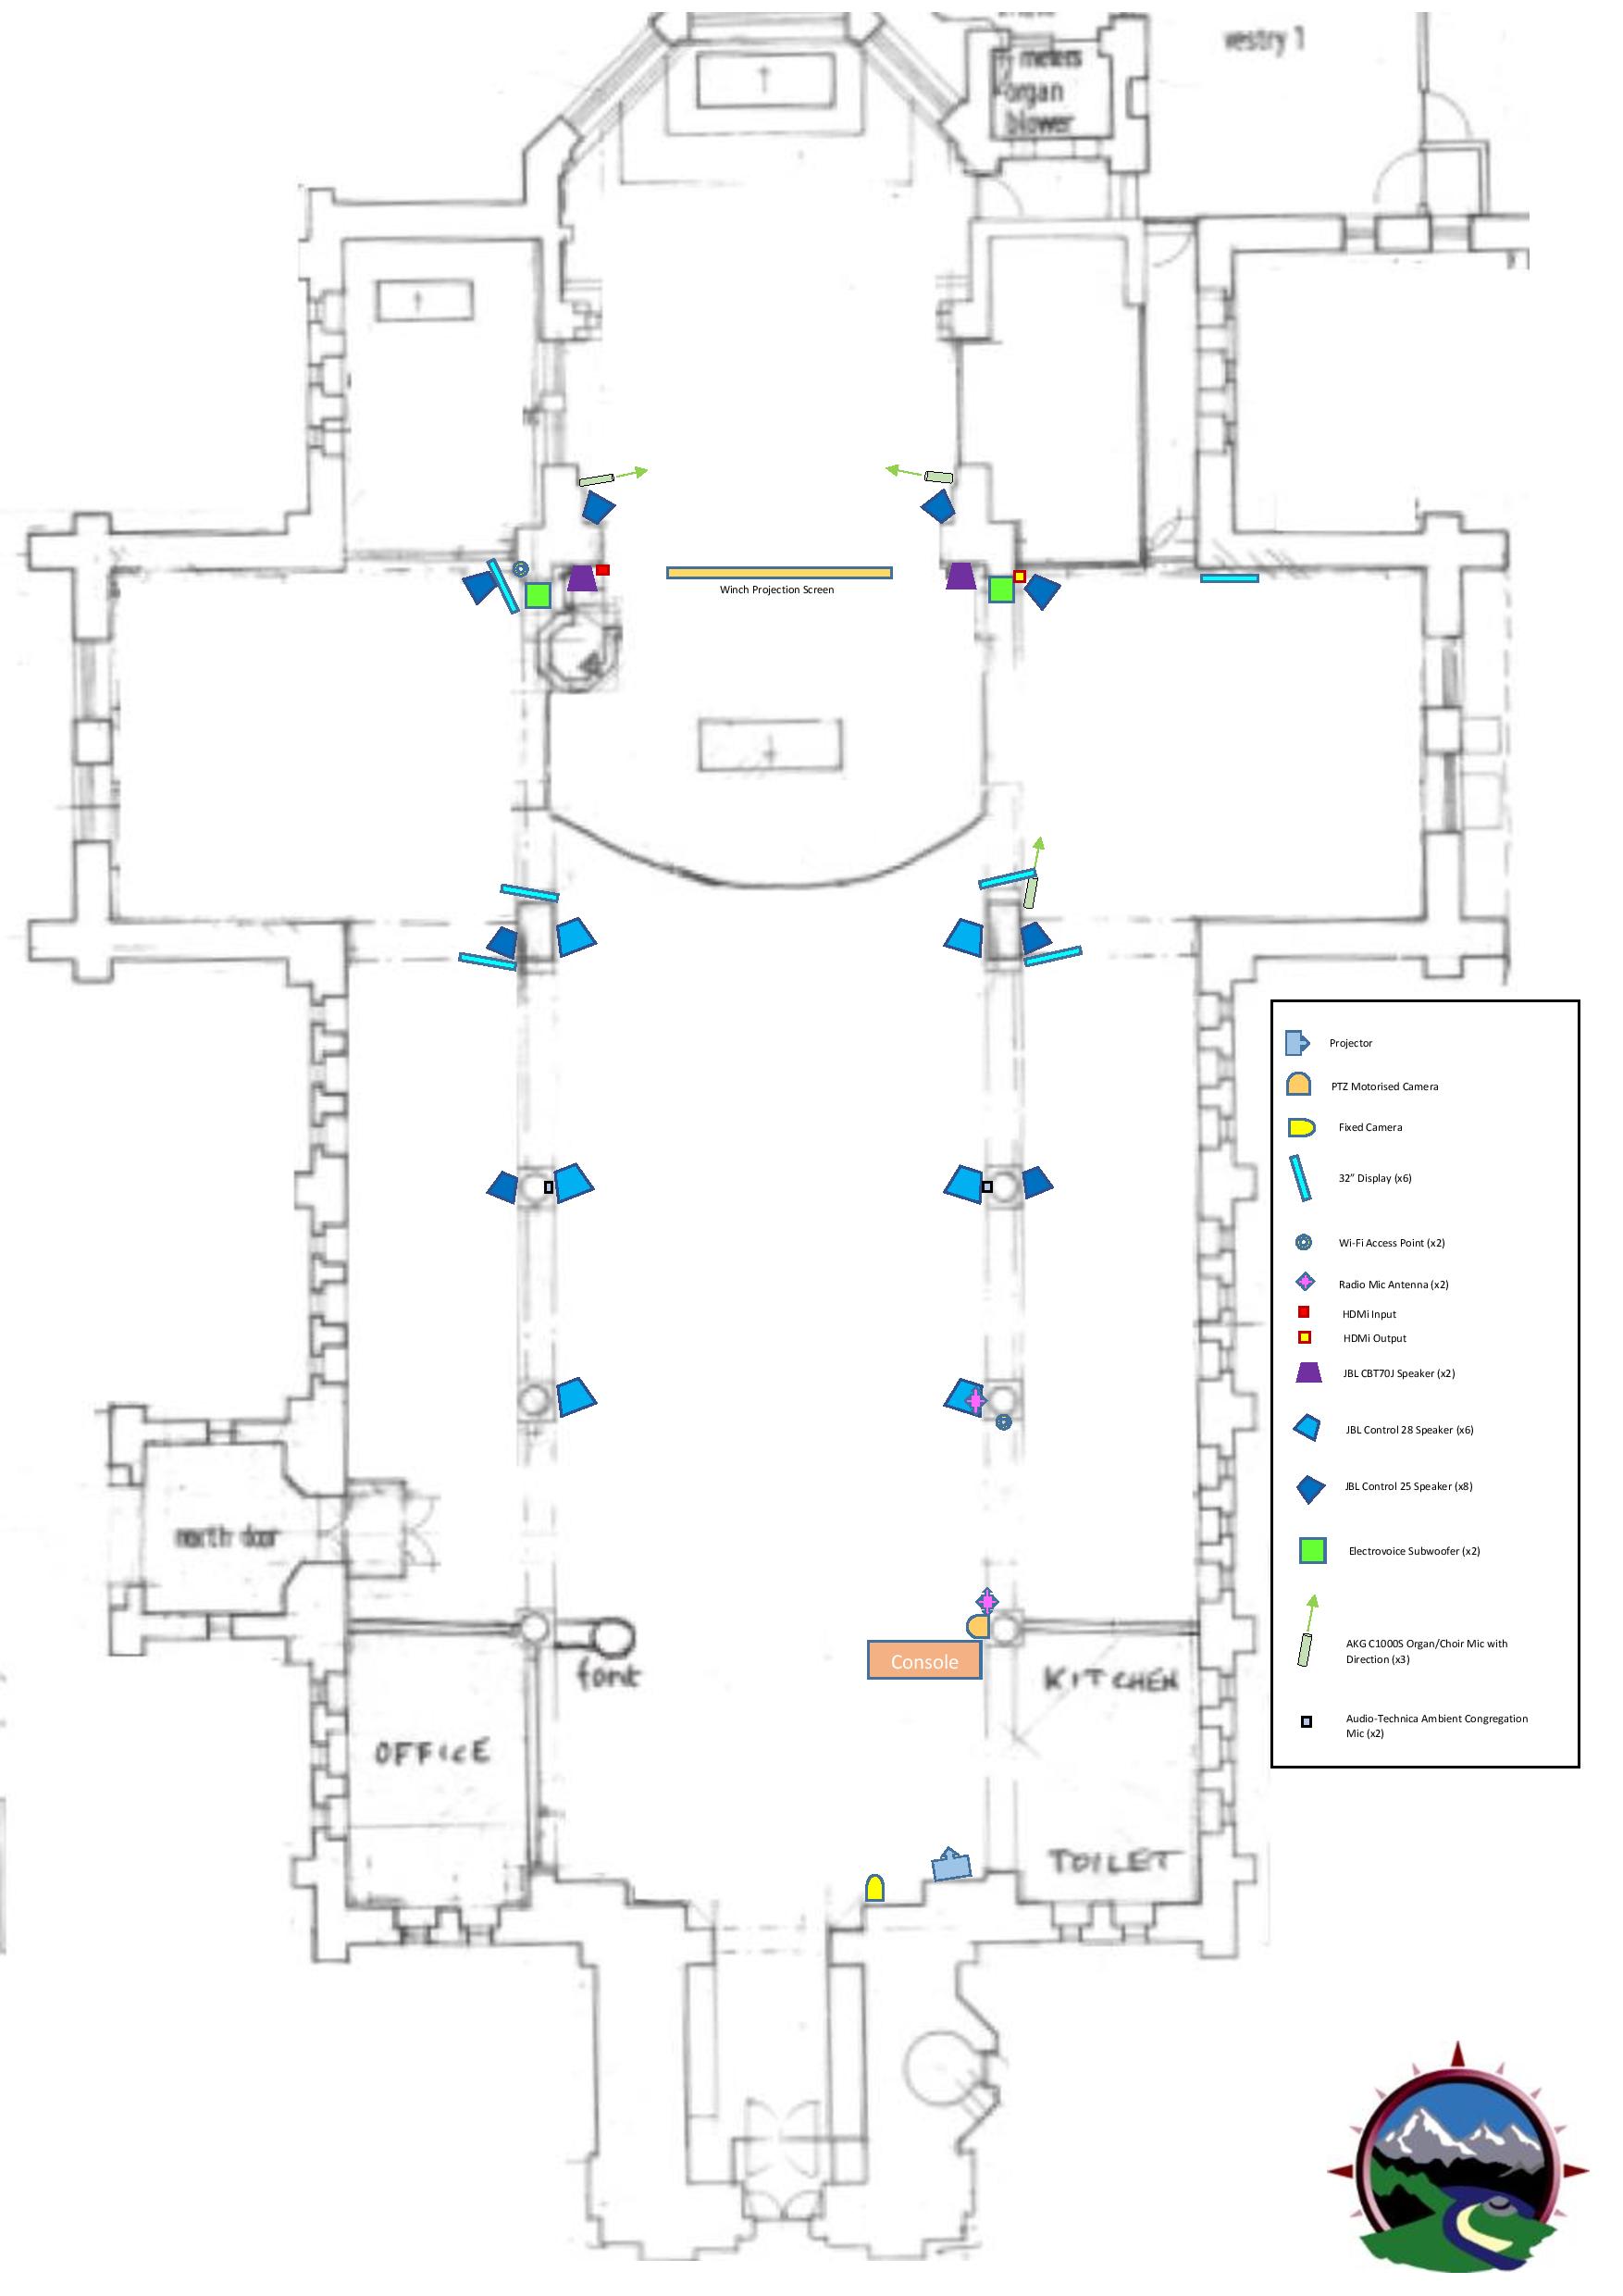 CAVS Church Floor Plan - StACh